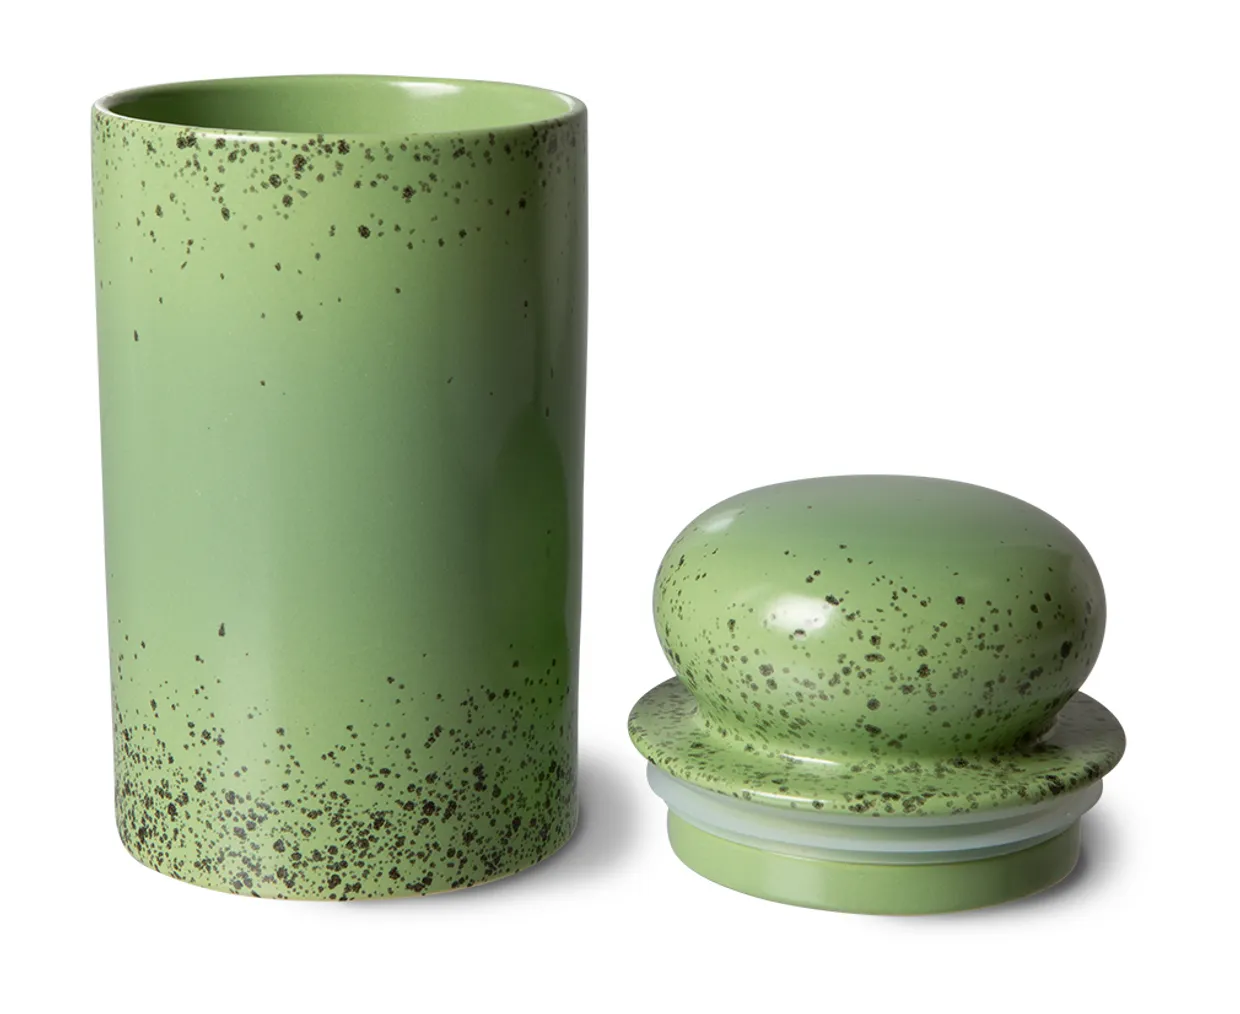 70s ceramics: storage jar, kiwi